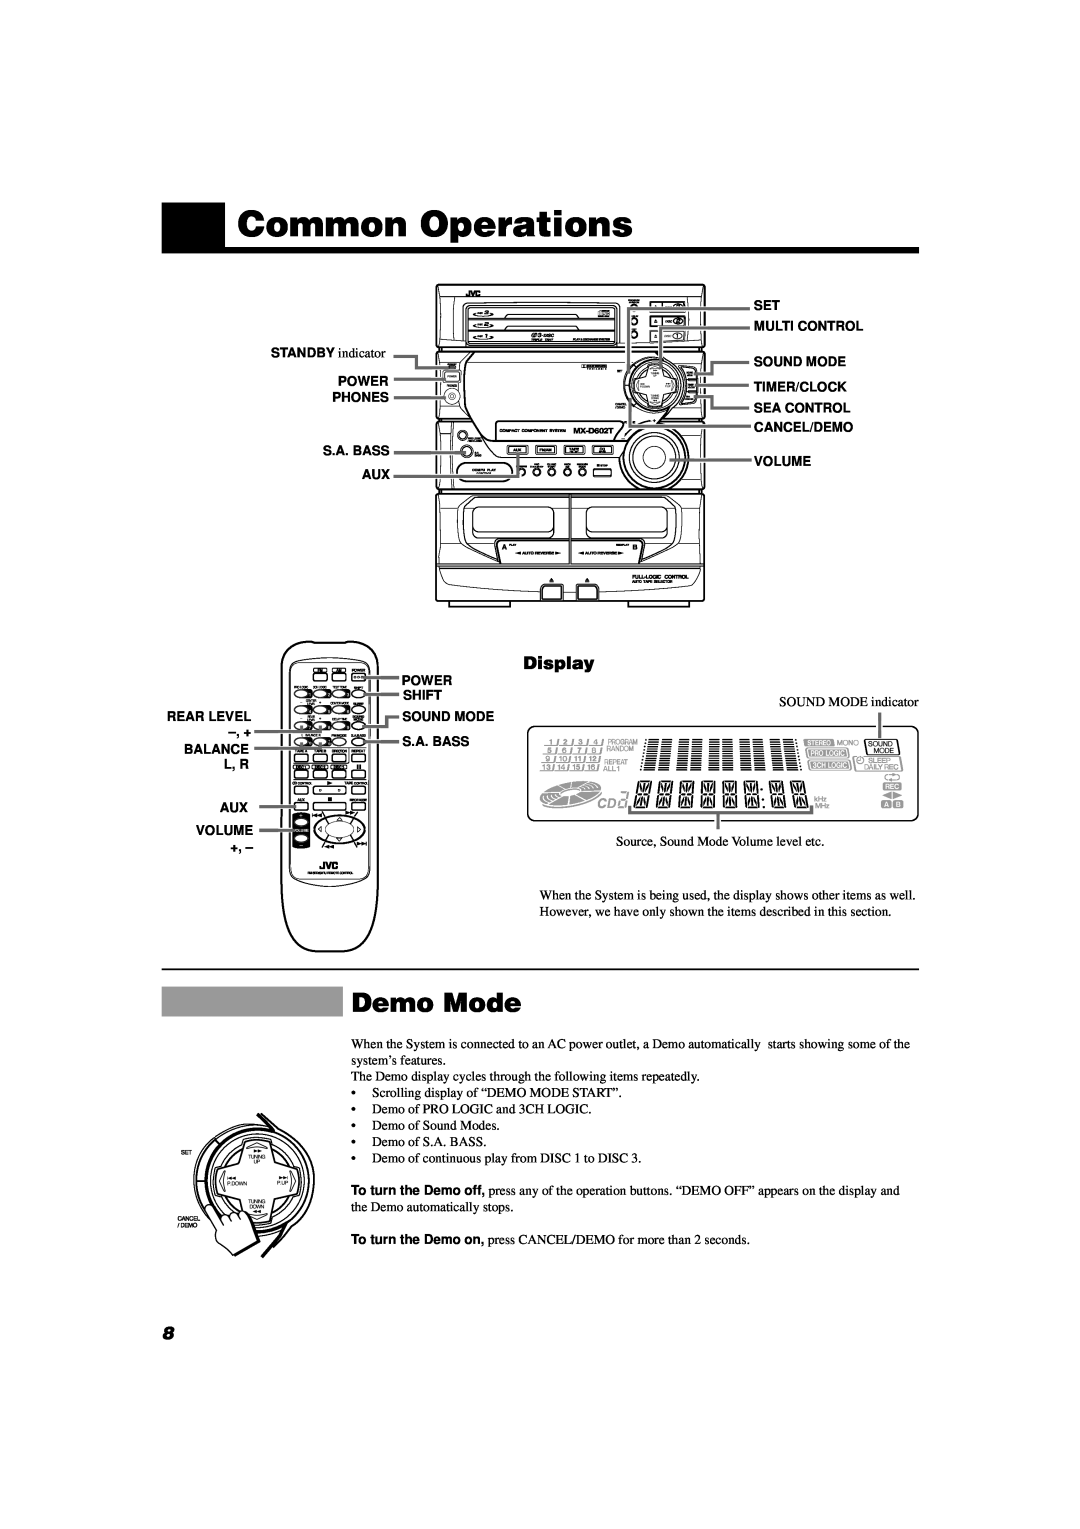 JVC MX-D602T manual Common Operations, Demo Mode, Power Phones S.A. Bass Aux, Multi Control, Sound Mode 